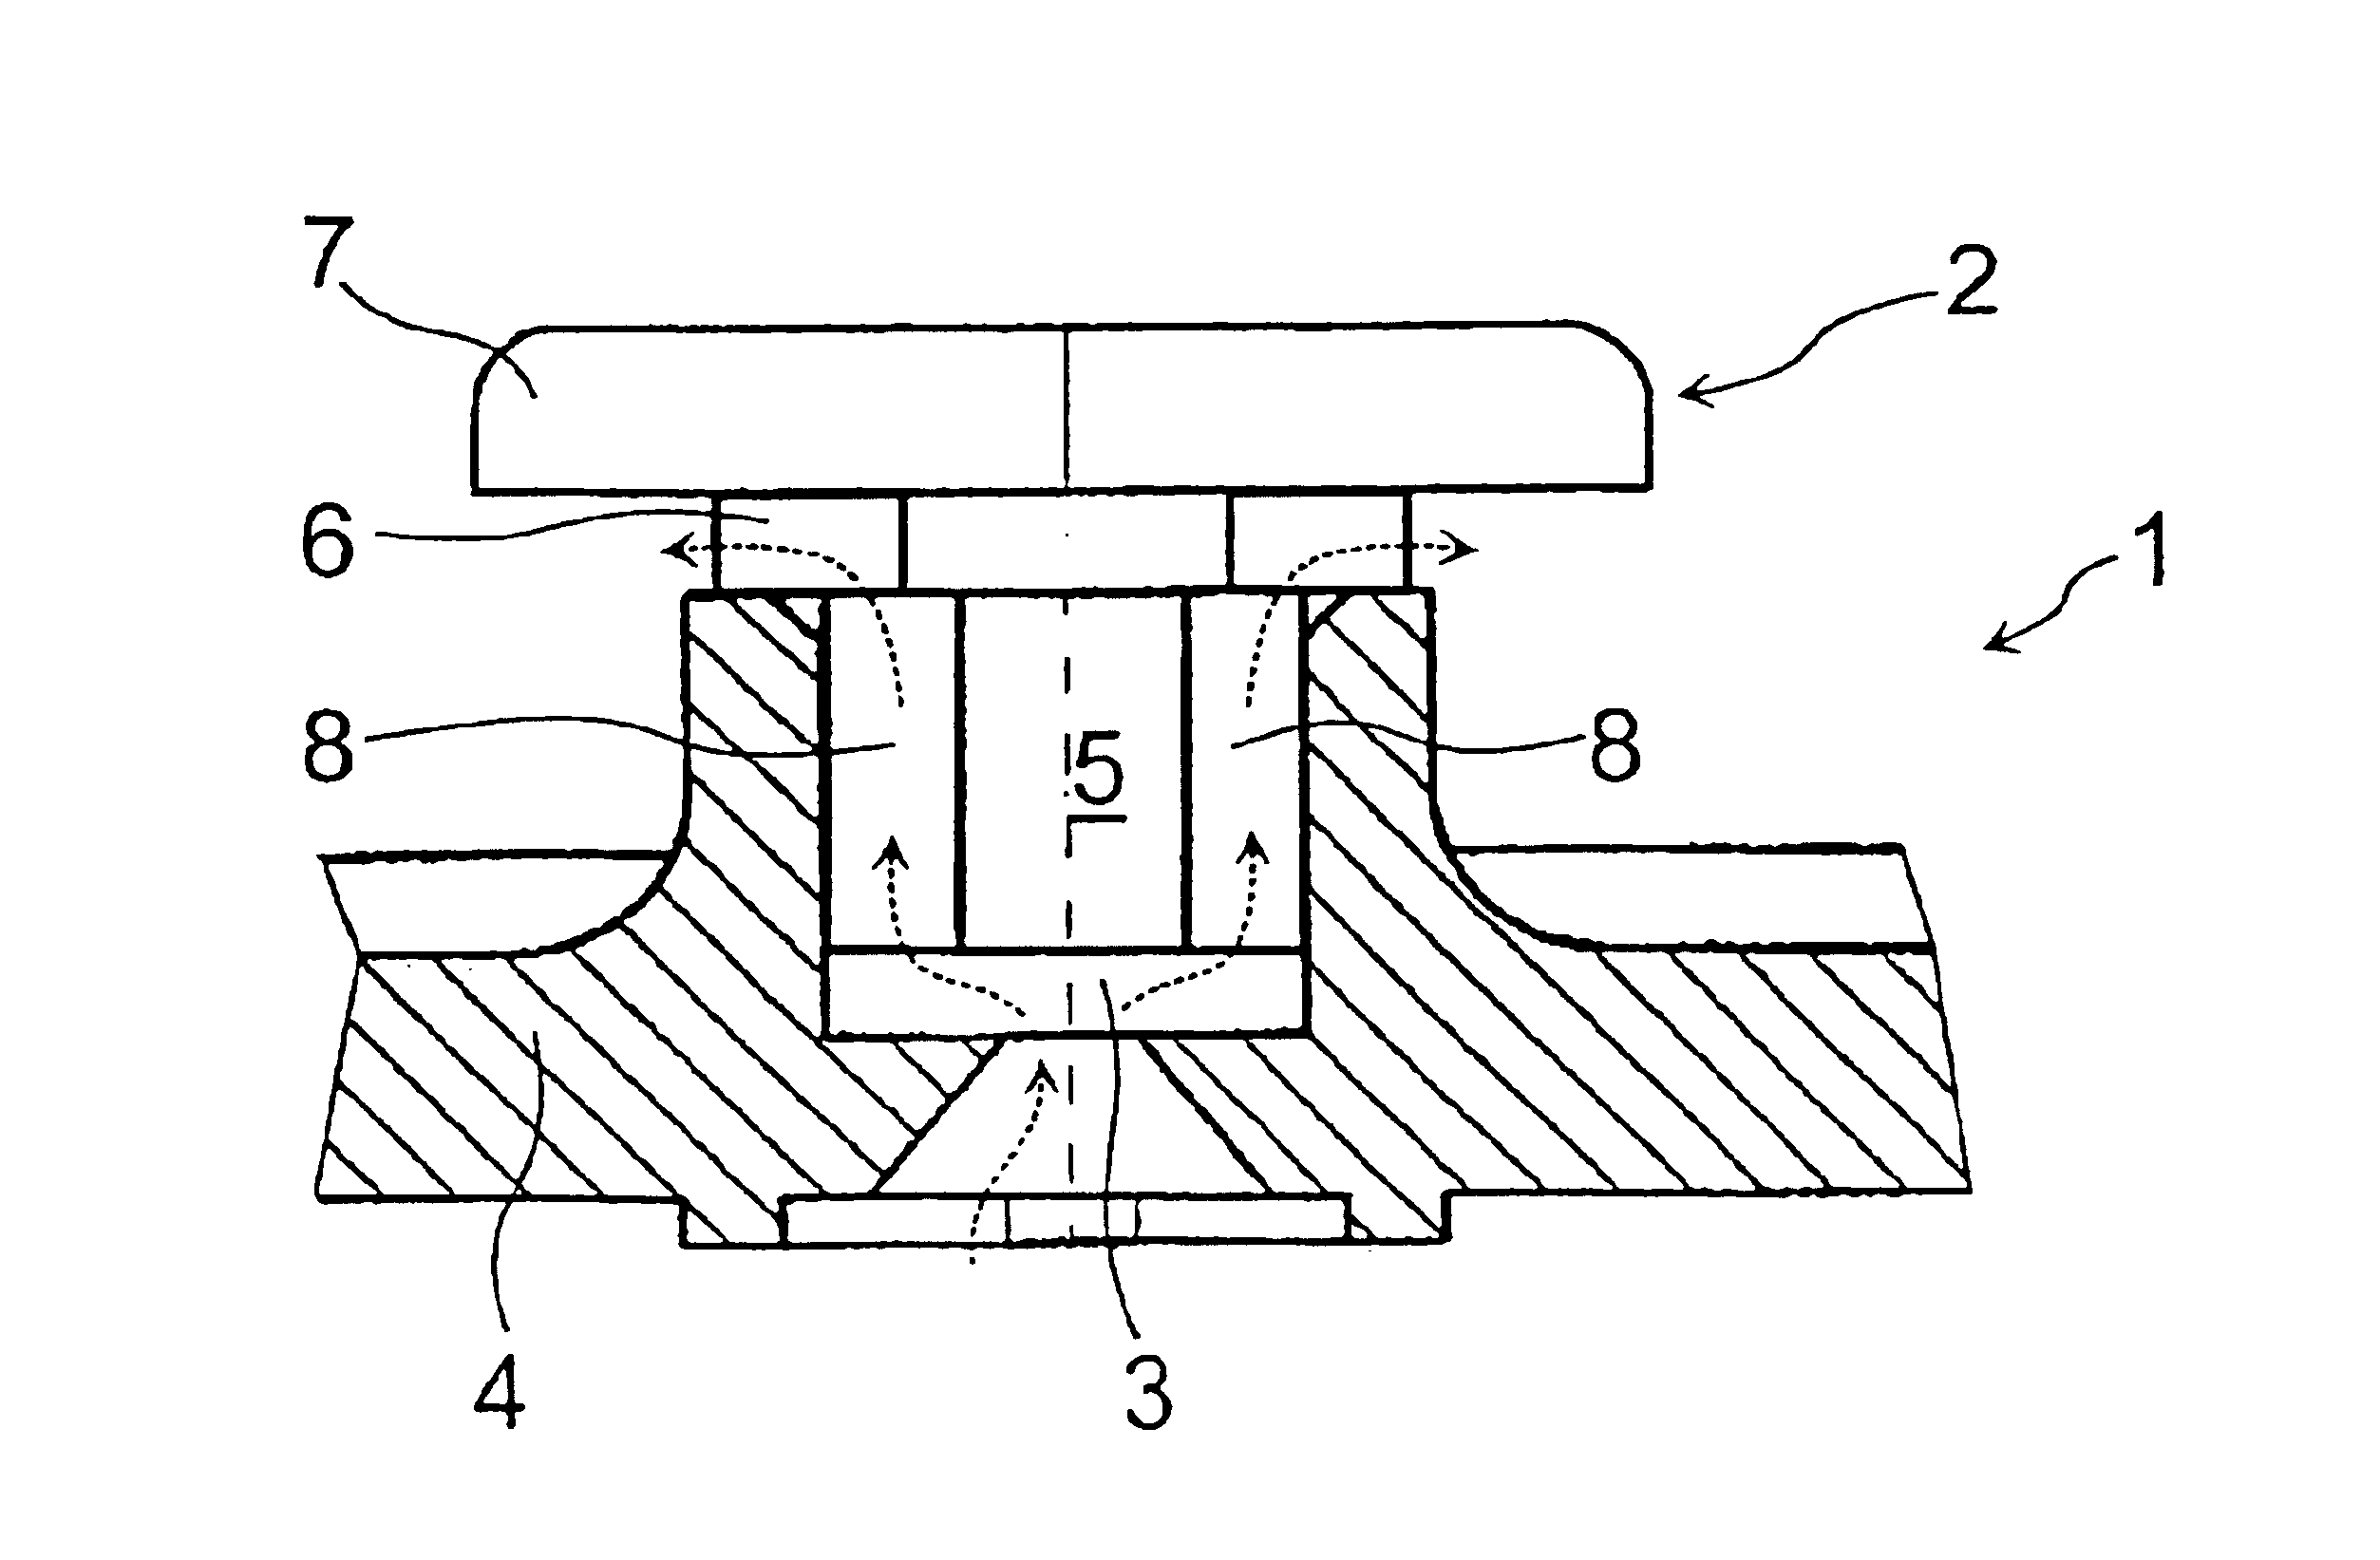 Configuration for forming a ventilation aperture